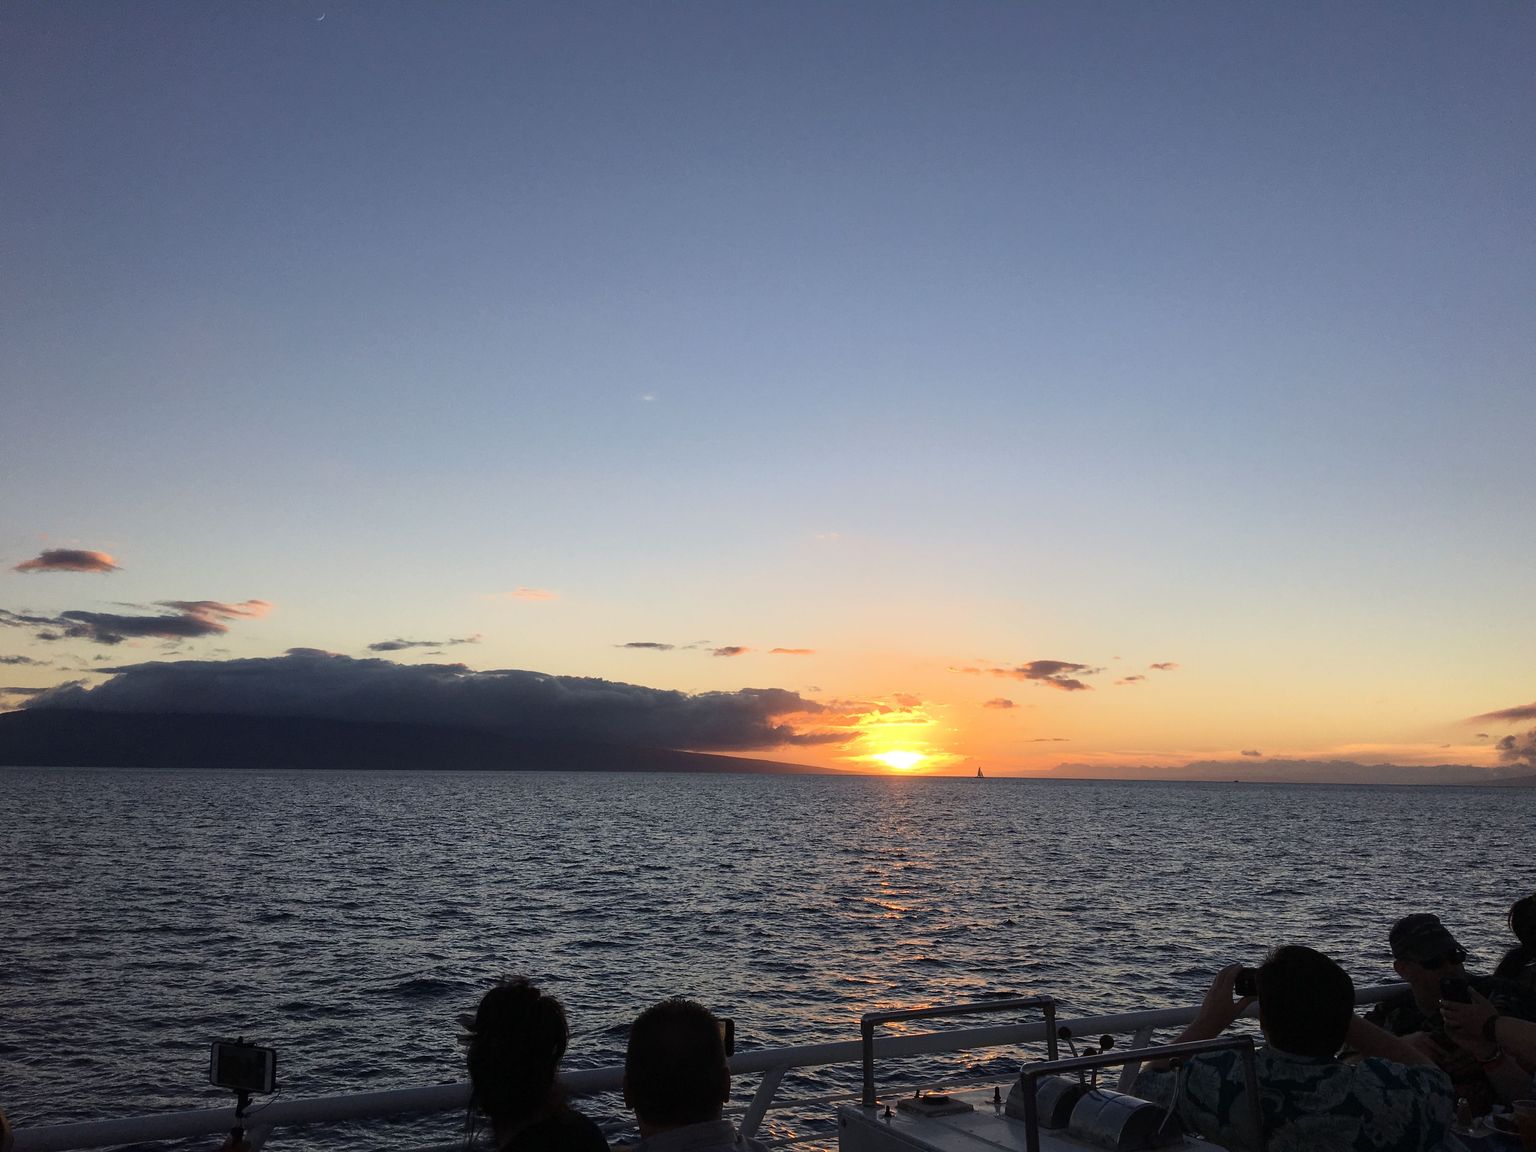 Sunset on the cruise